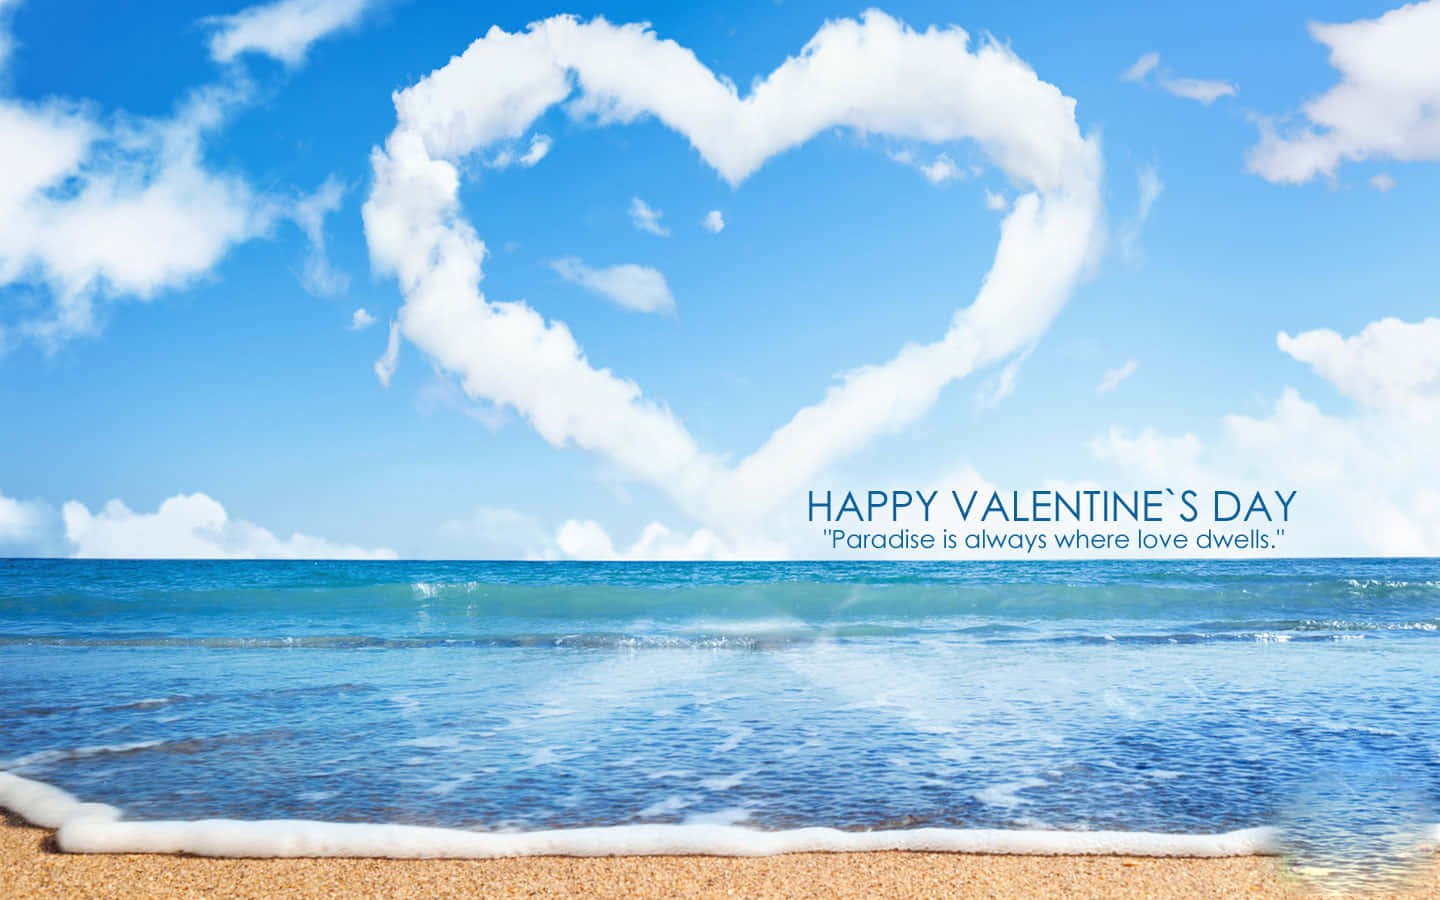 Celebrate Love This Valentine's Day